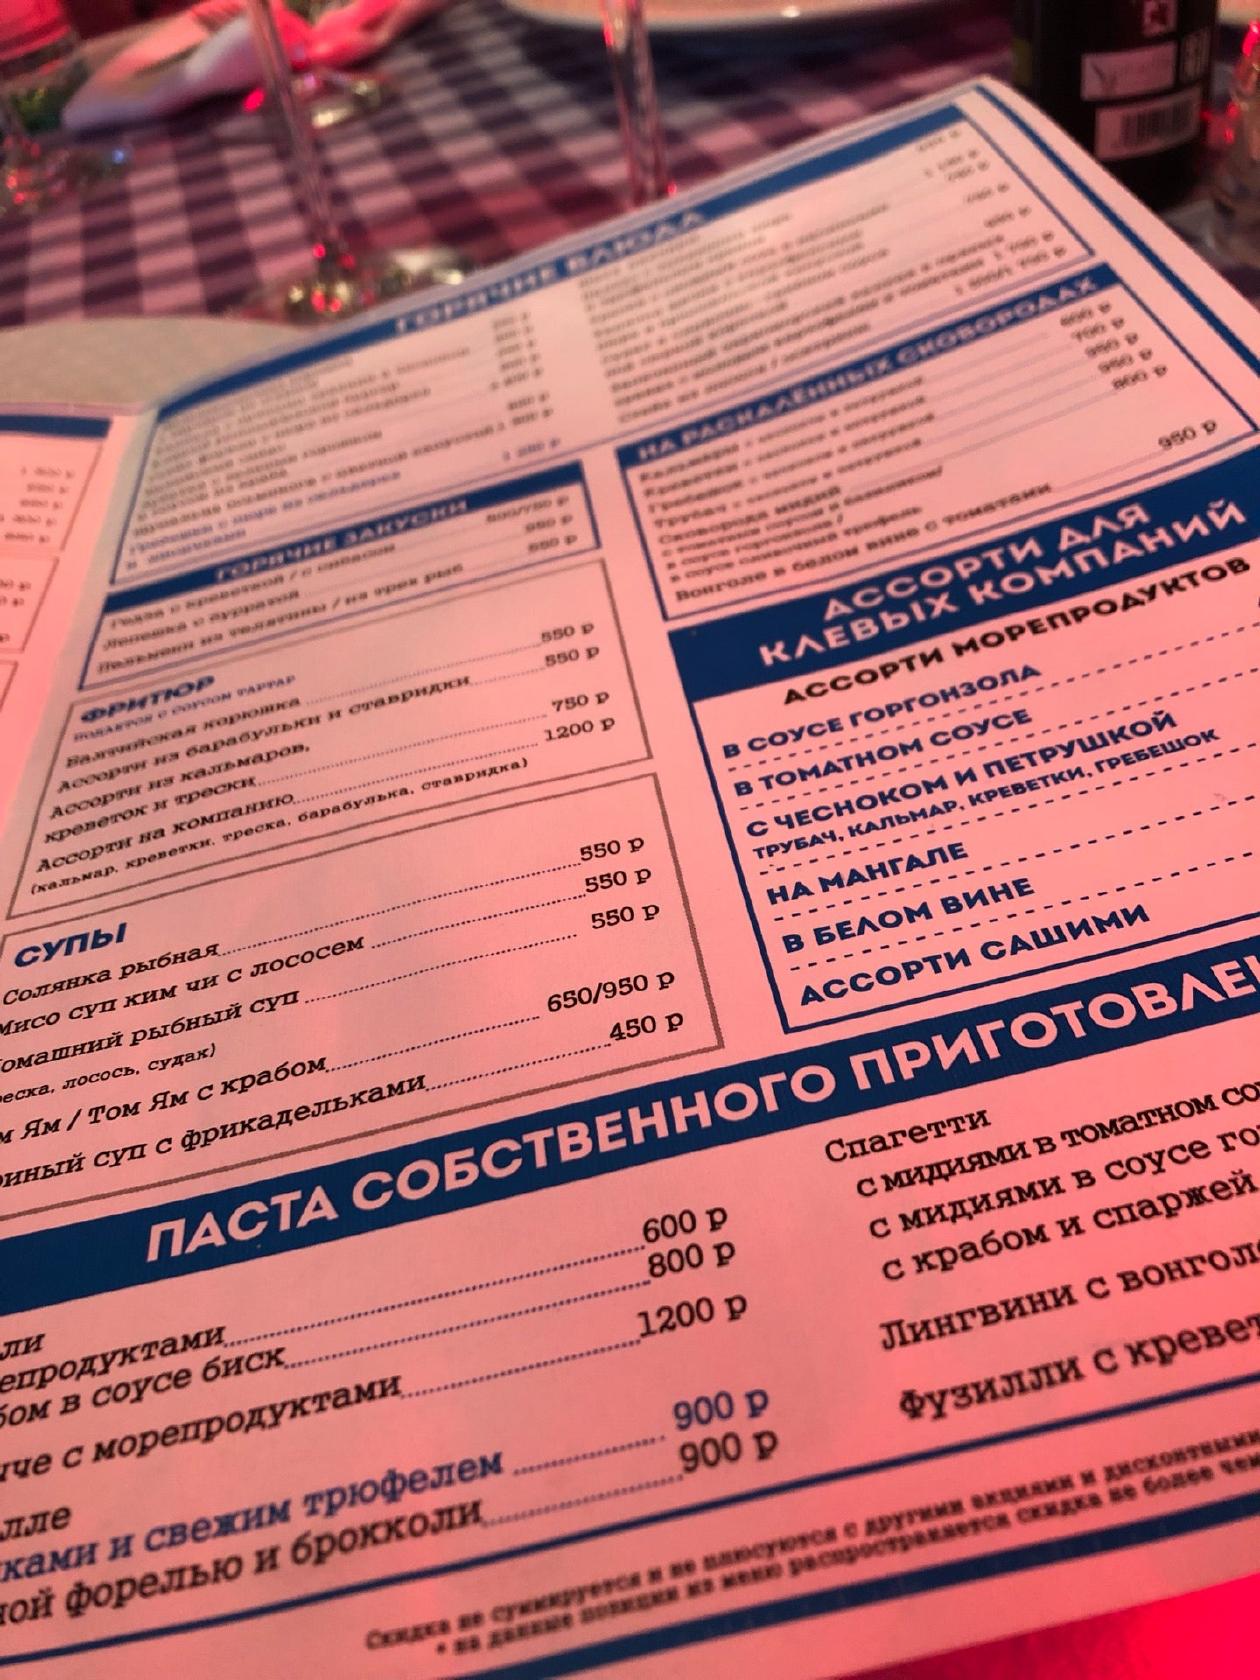 Ресторан клево цены. Клево меню. Ресторан клево меню. Клево ресторан в Москве меню. Klevo ресторан.